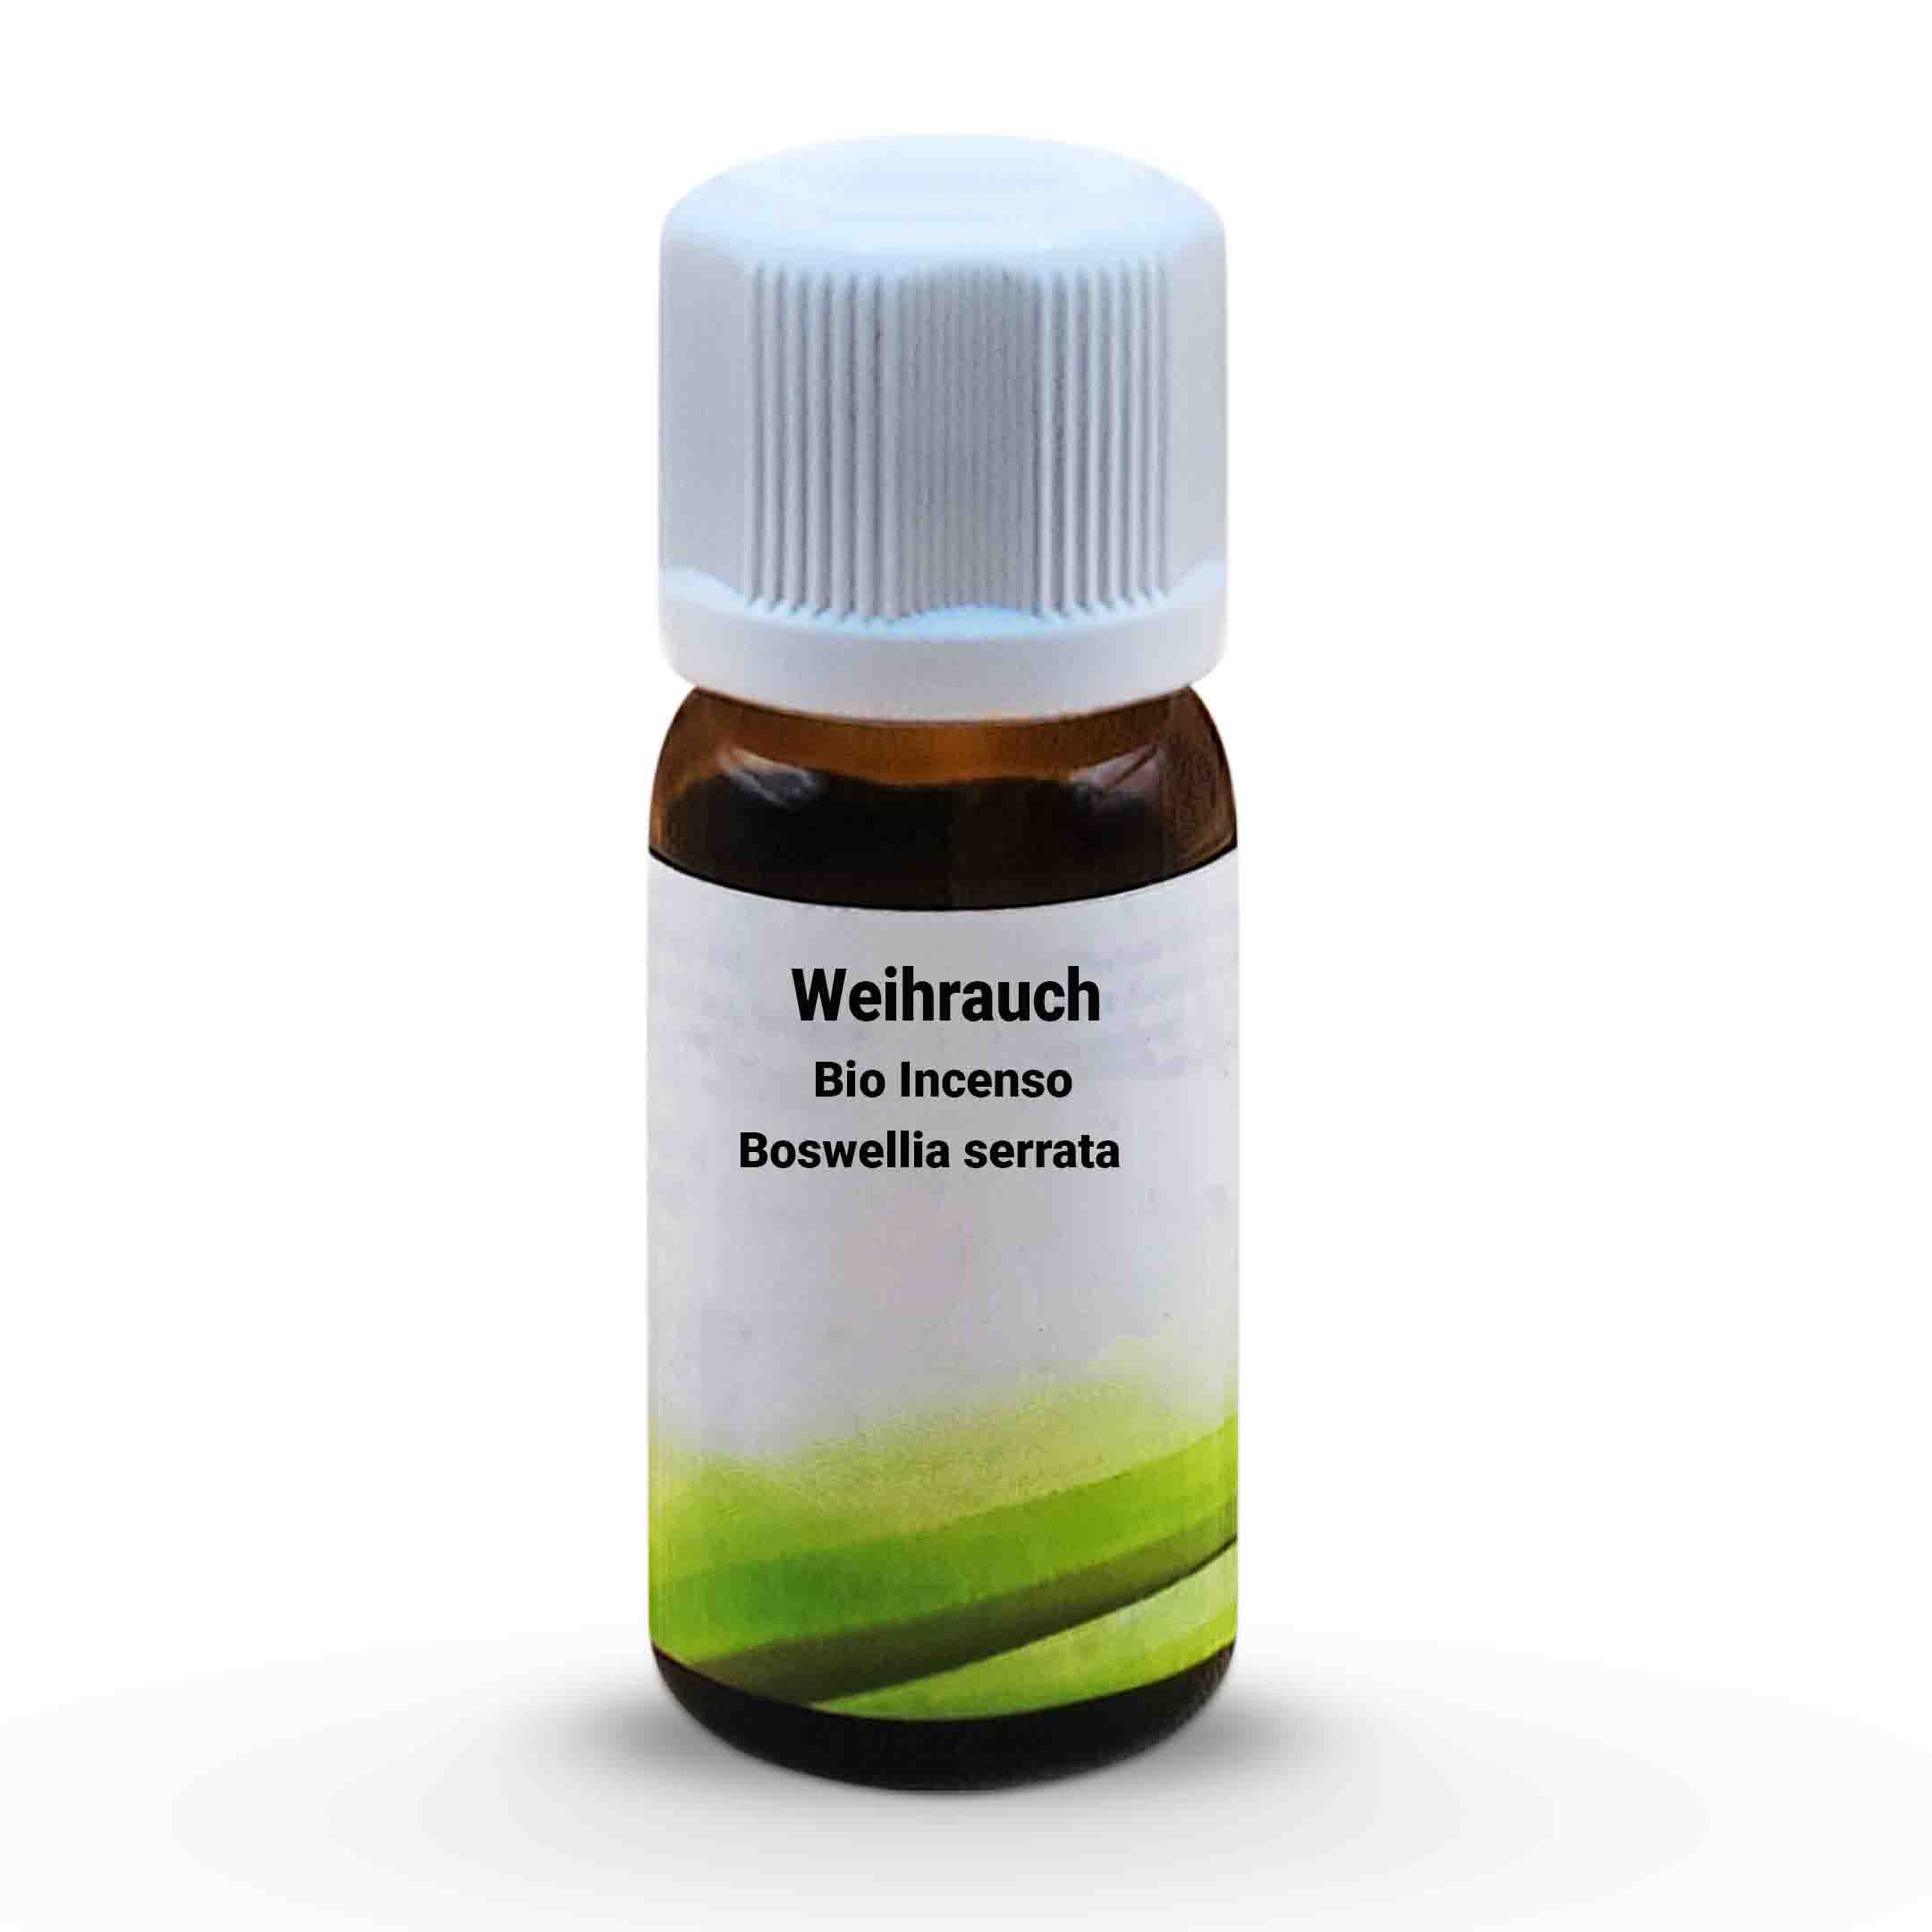 Weihrauch Bio Incenso - Boswellia serrata 10 ml